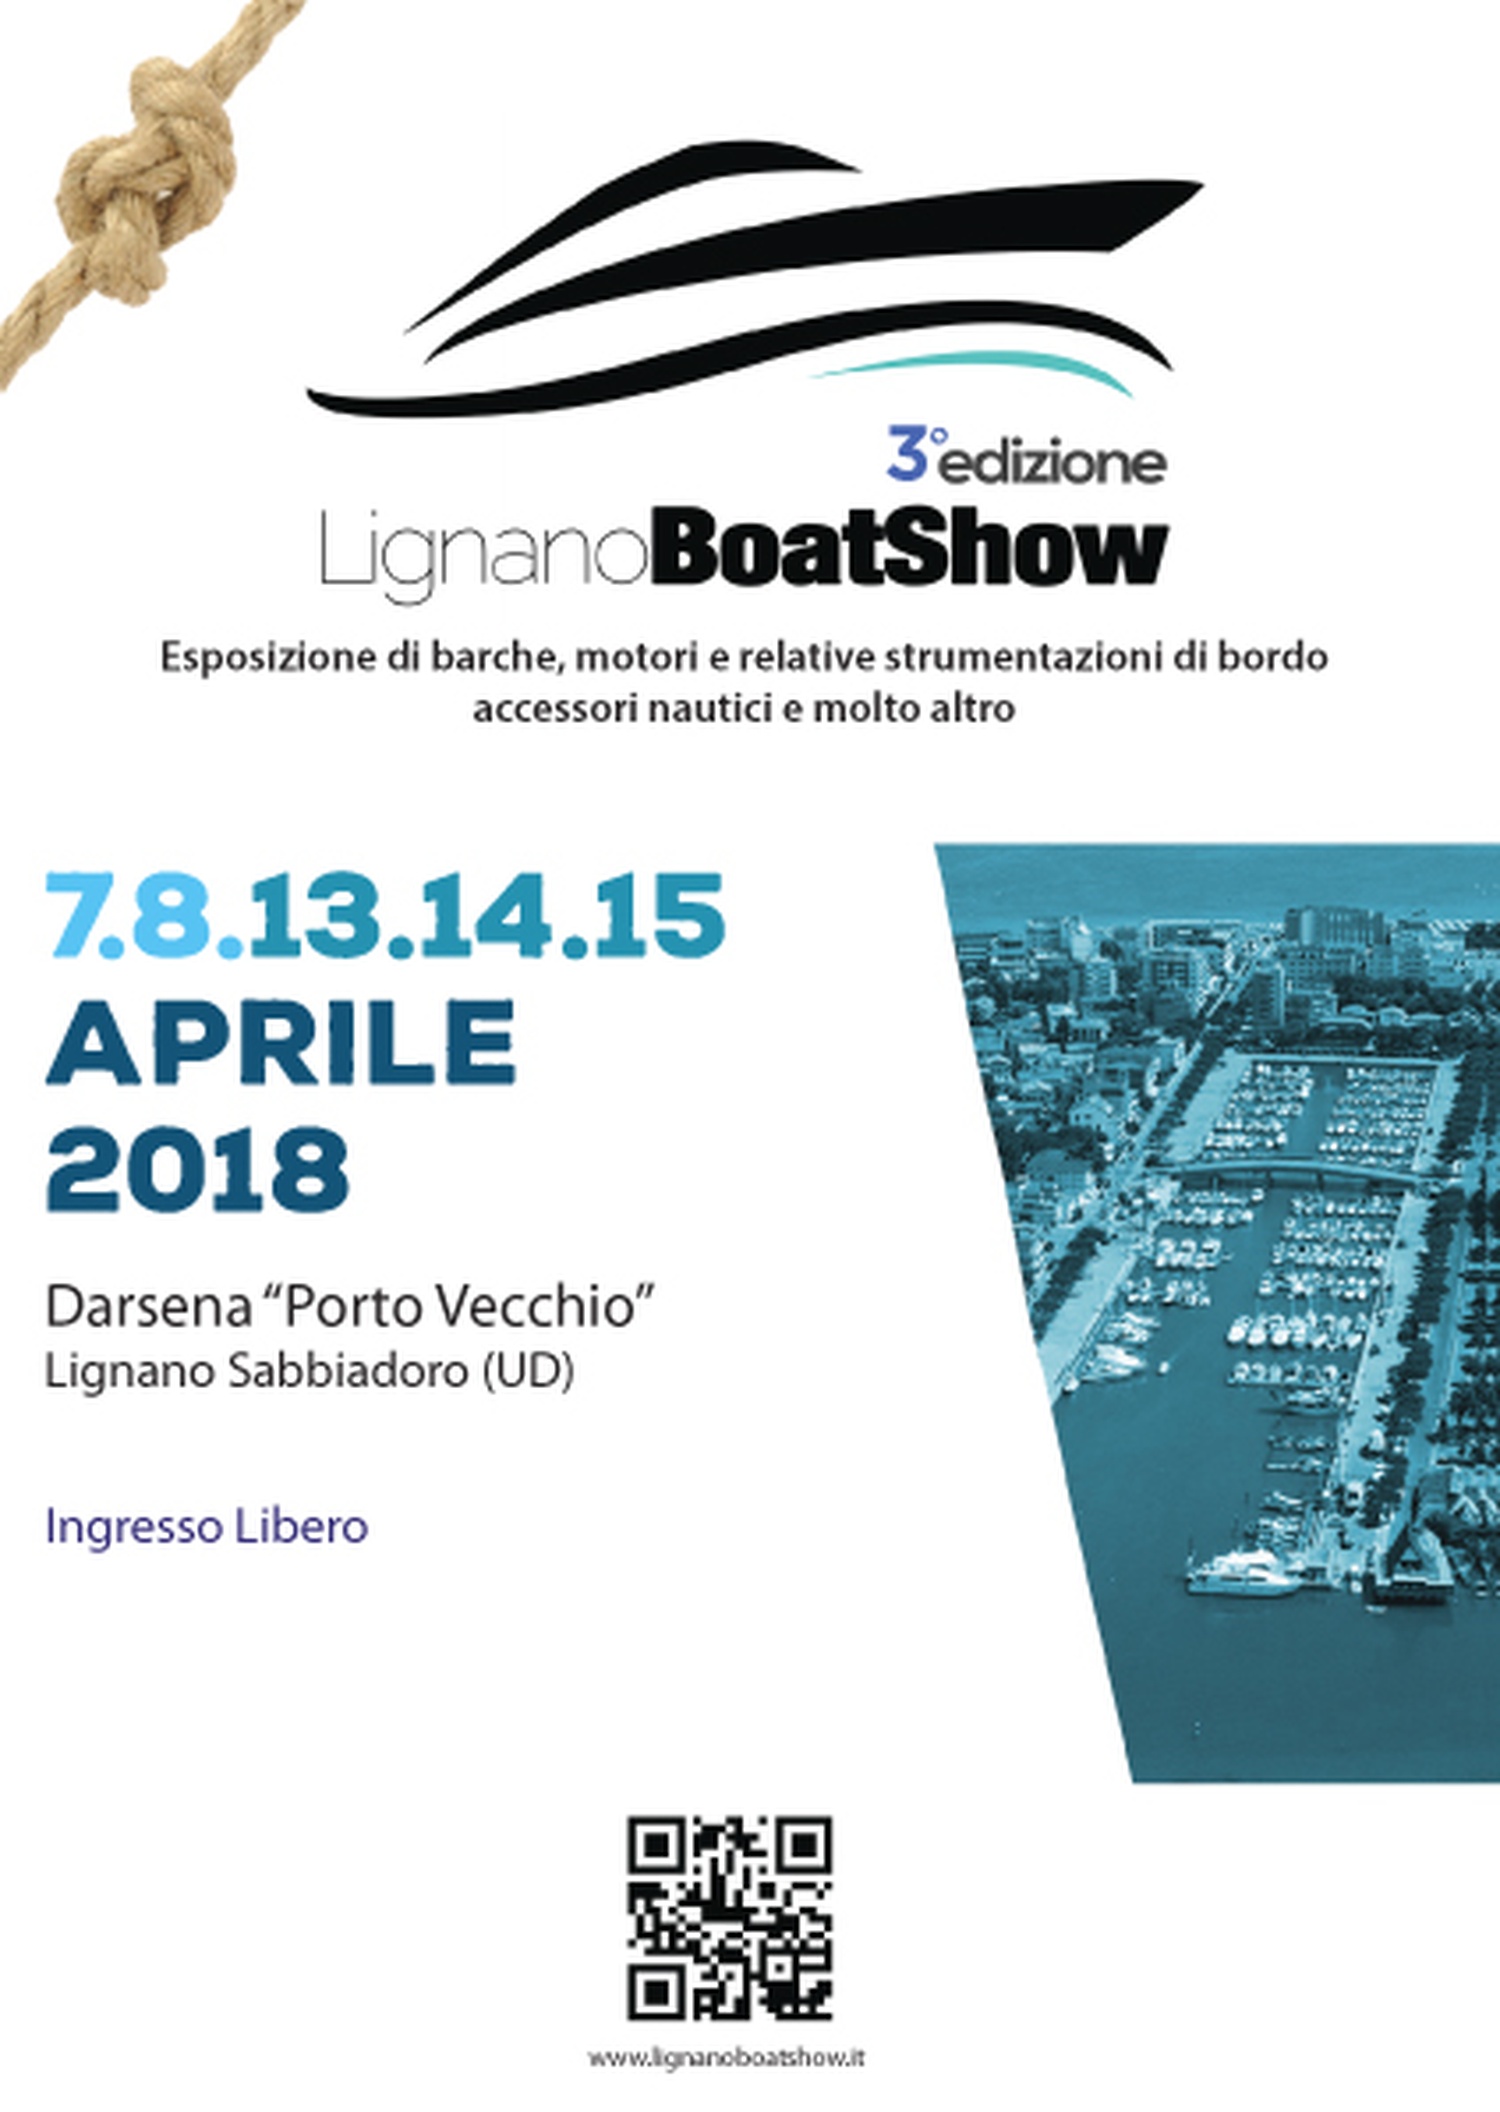 Lignano Boat Show 2018